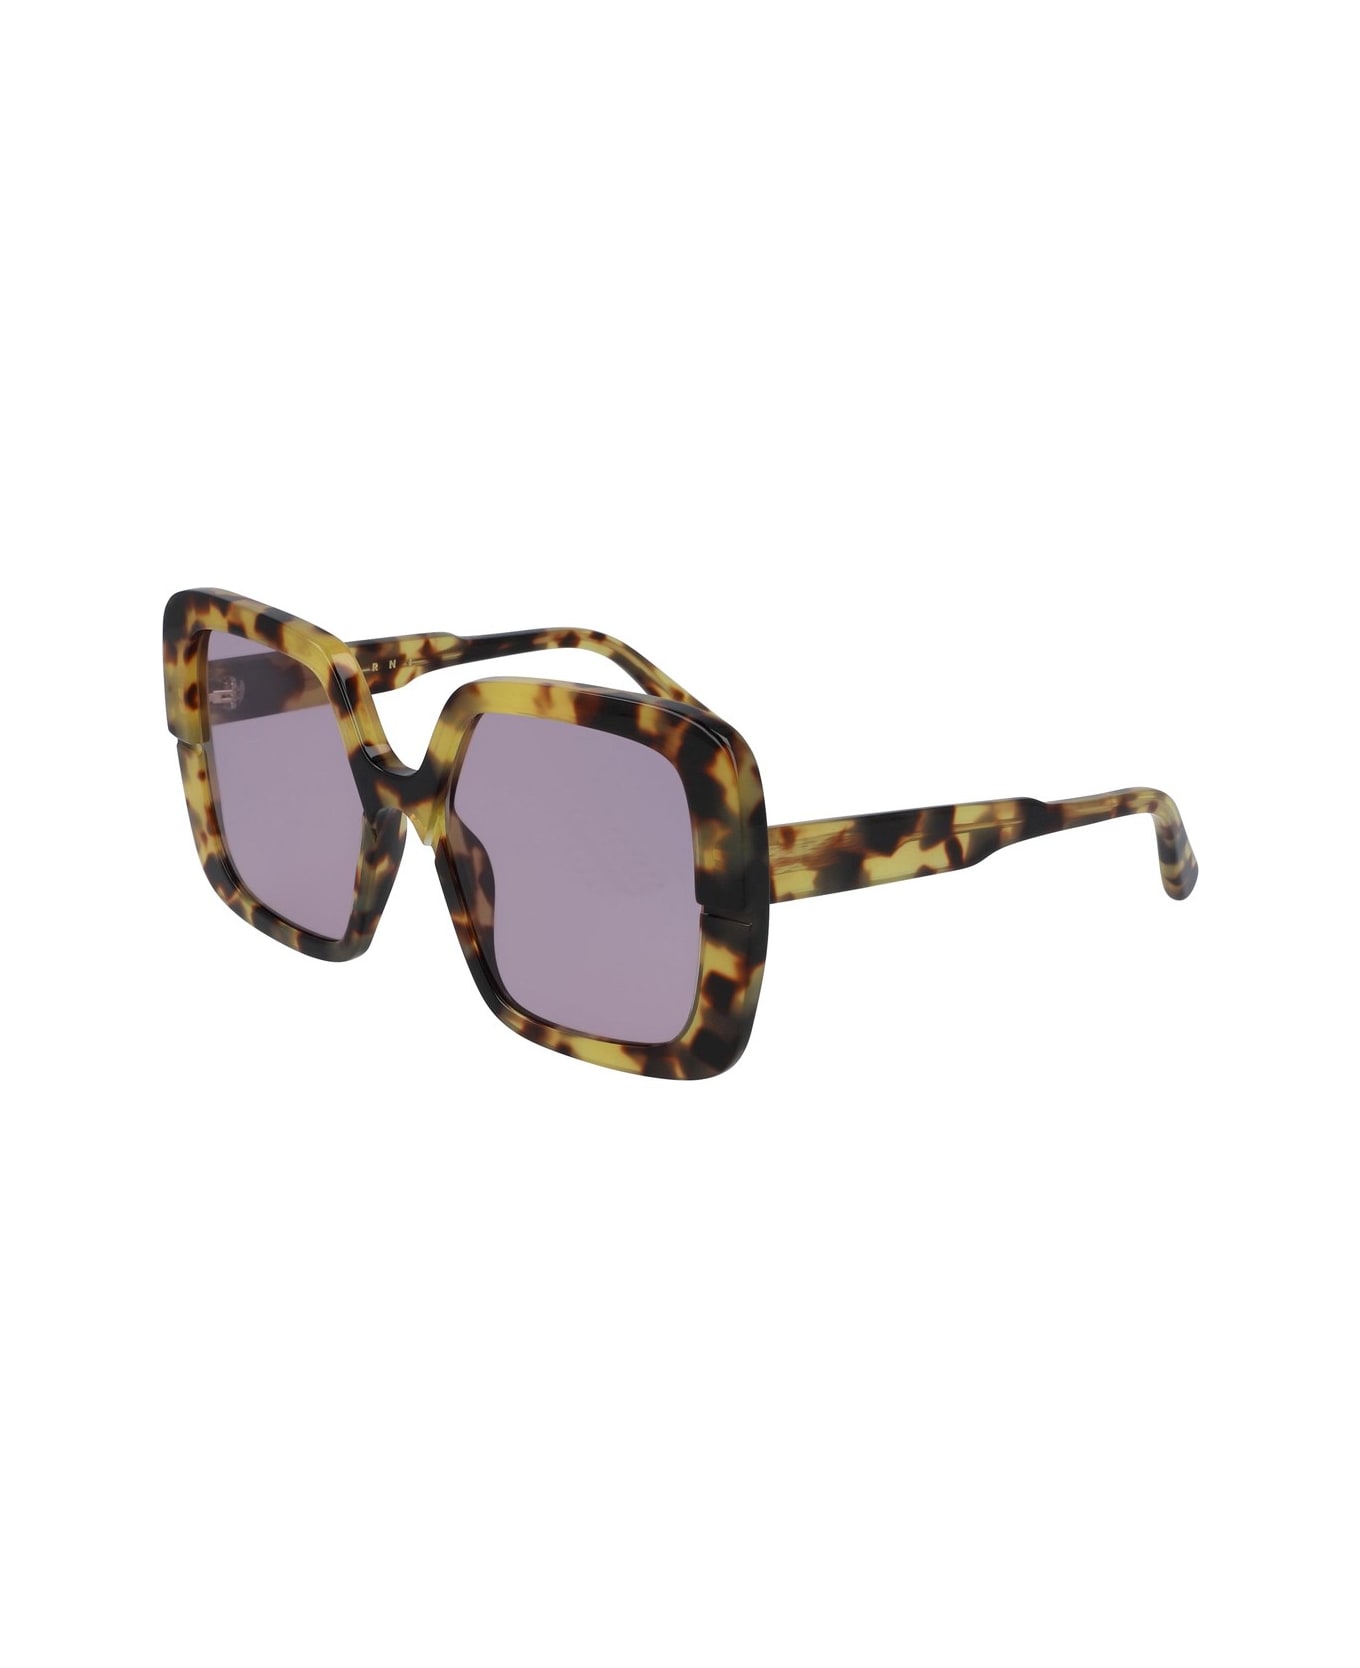 Marni Eyewear Me643s Sunglasses - Marrone サングラス